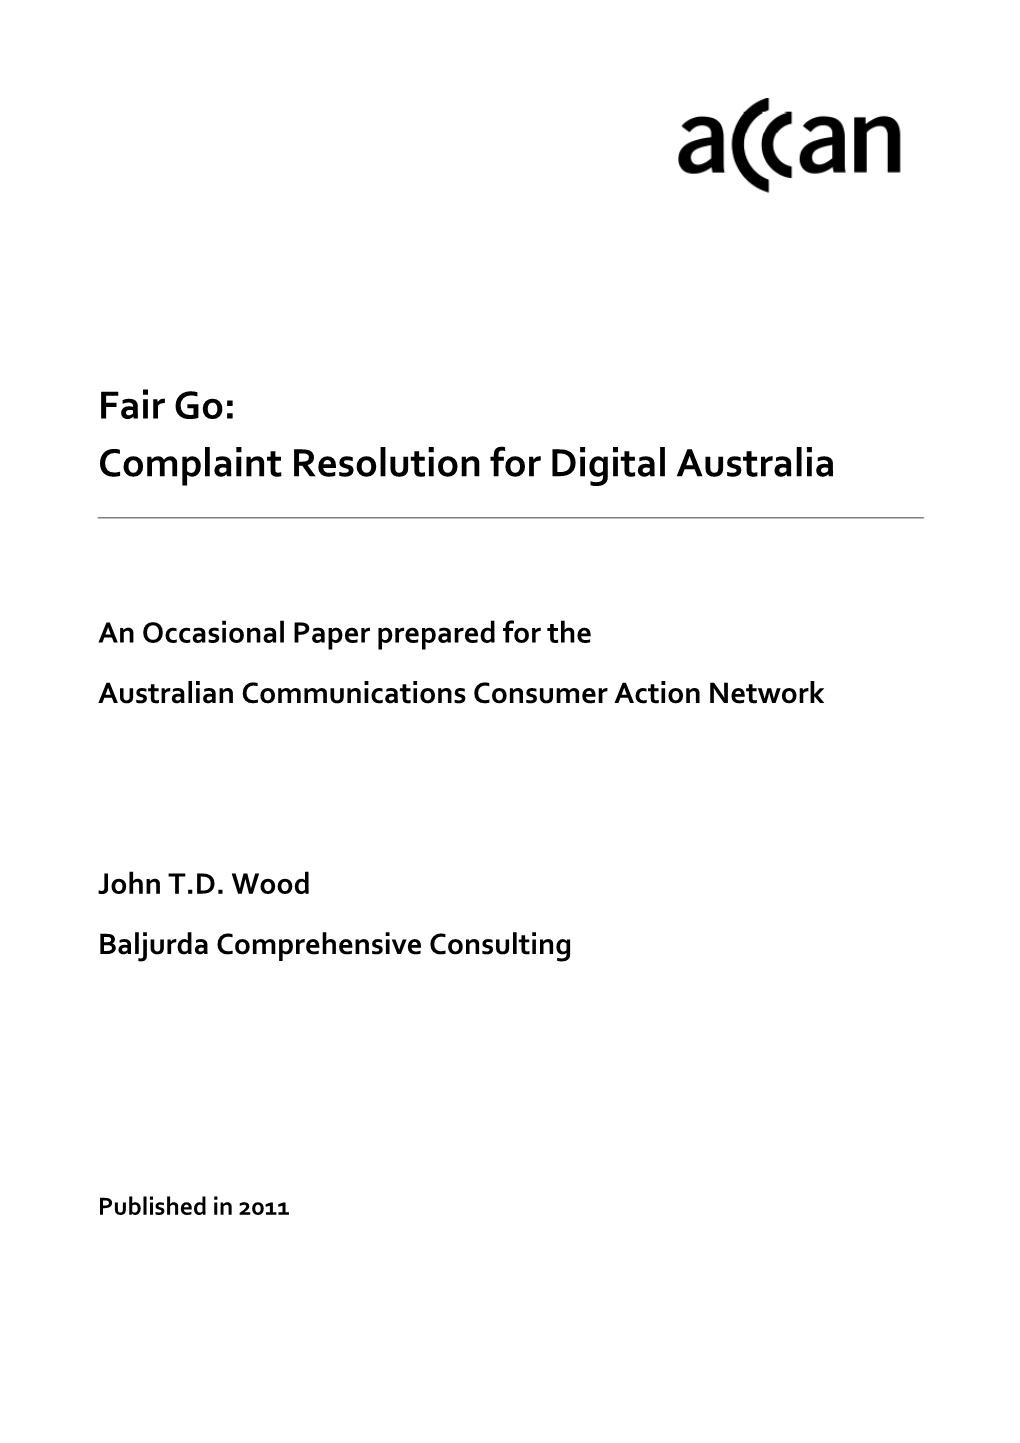 Complaint Resolution for Digital Australia